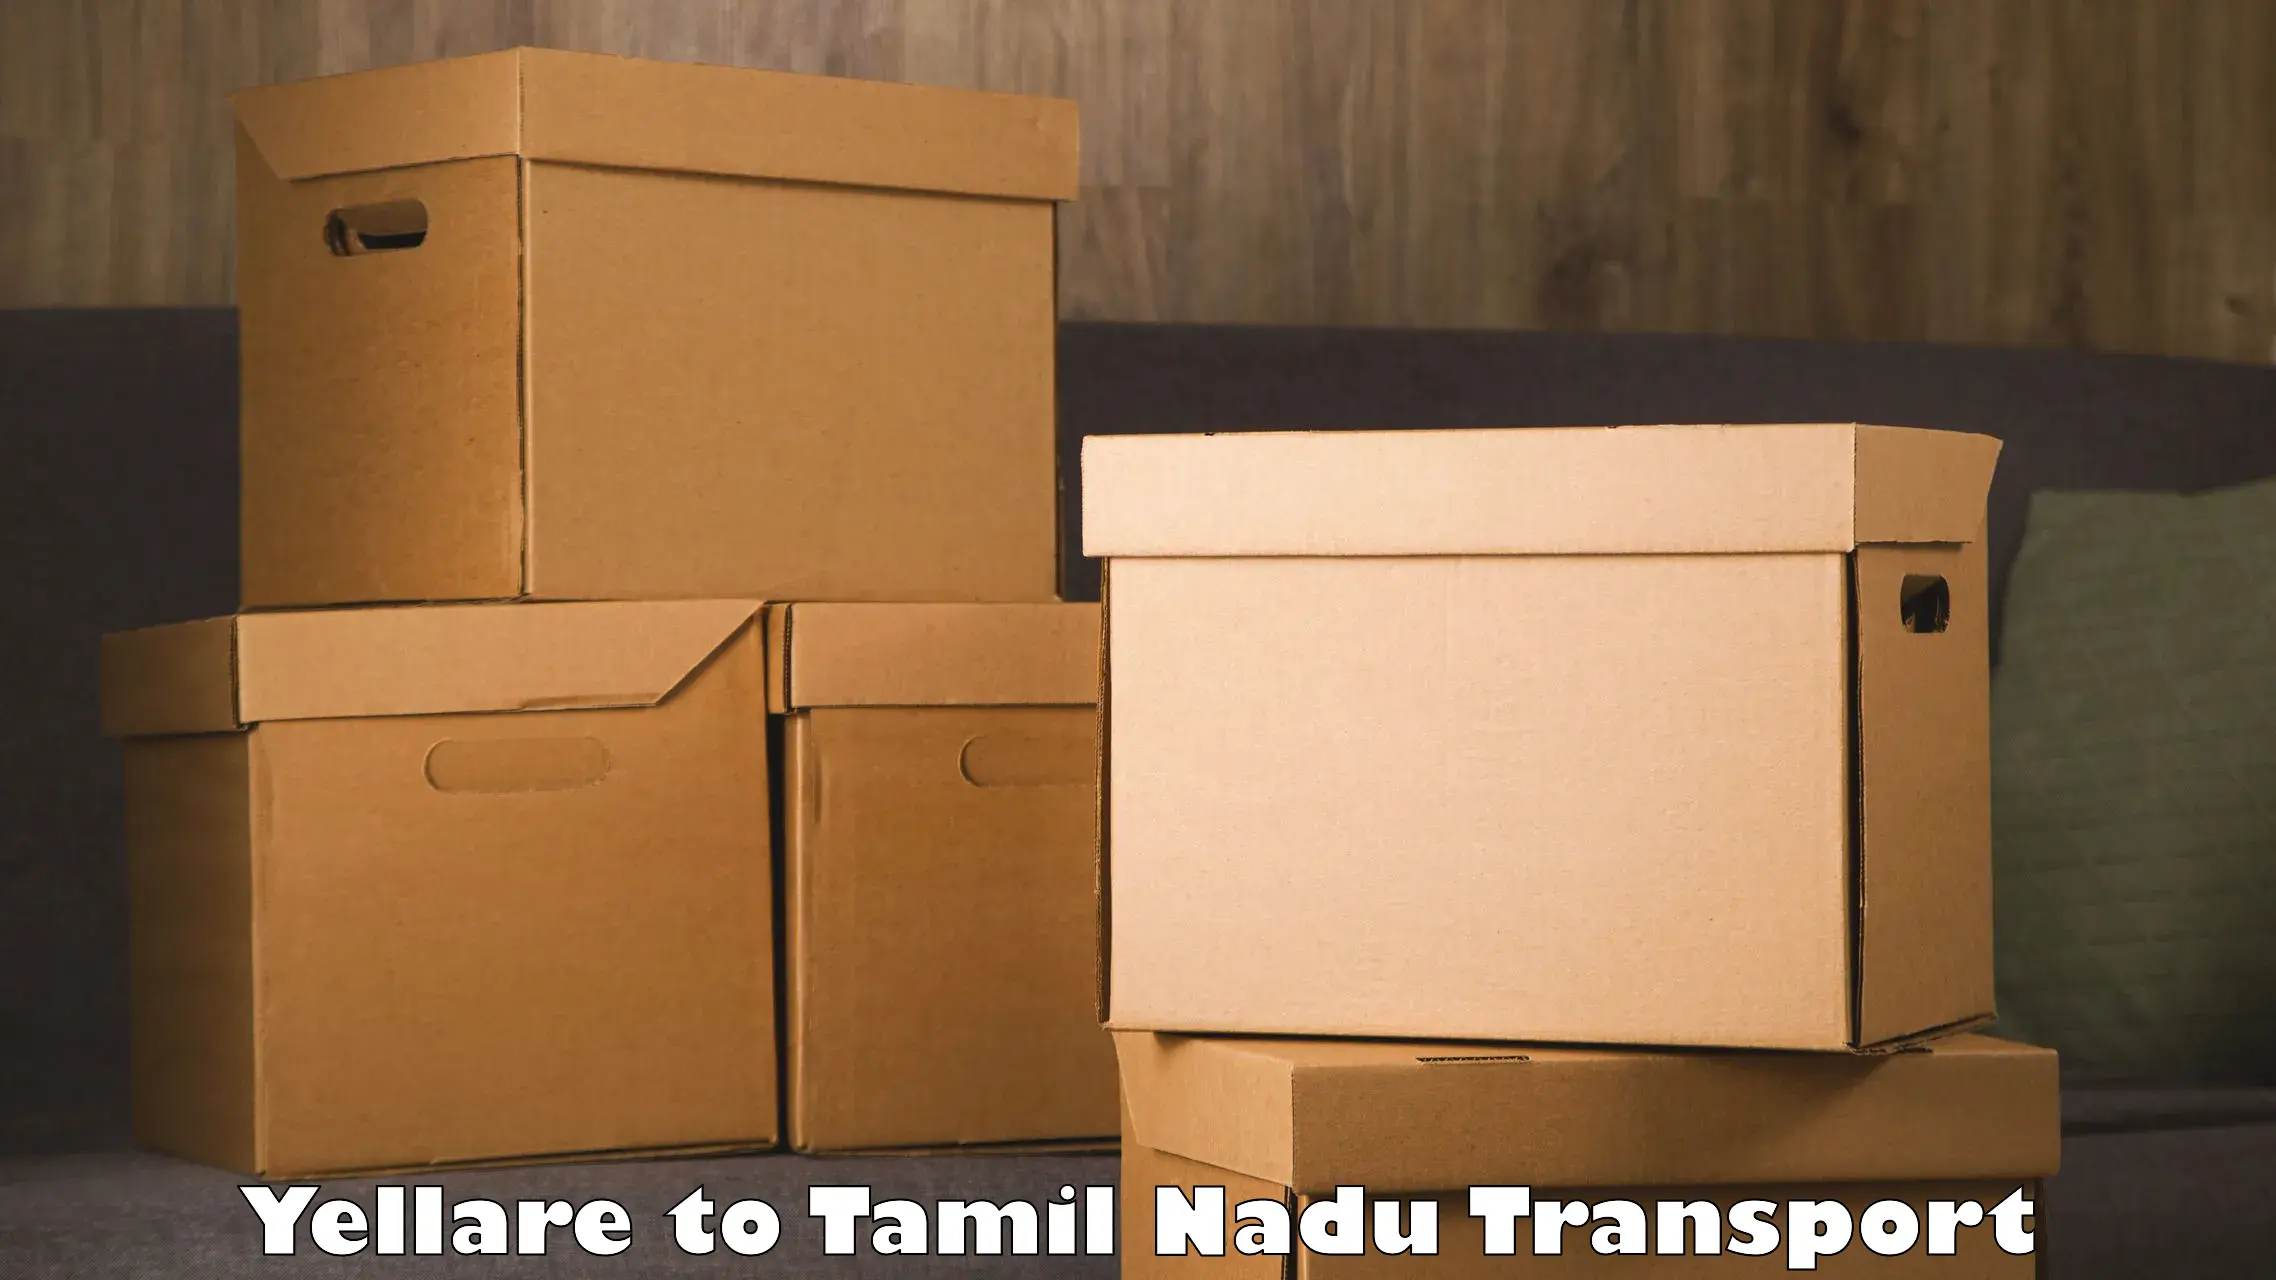 Furniture transport service Yellare to Tamil Nadu